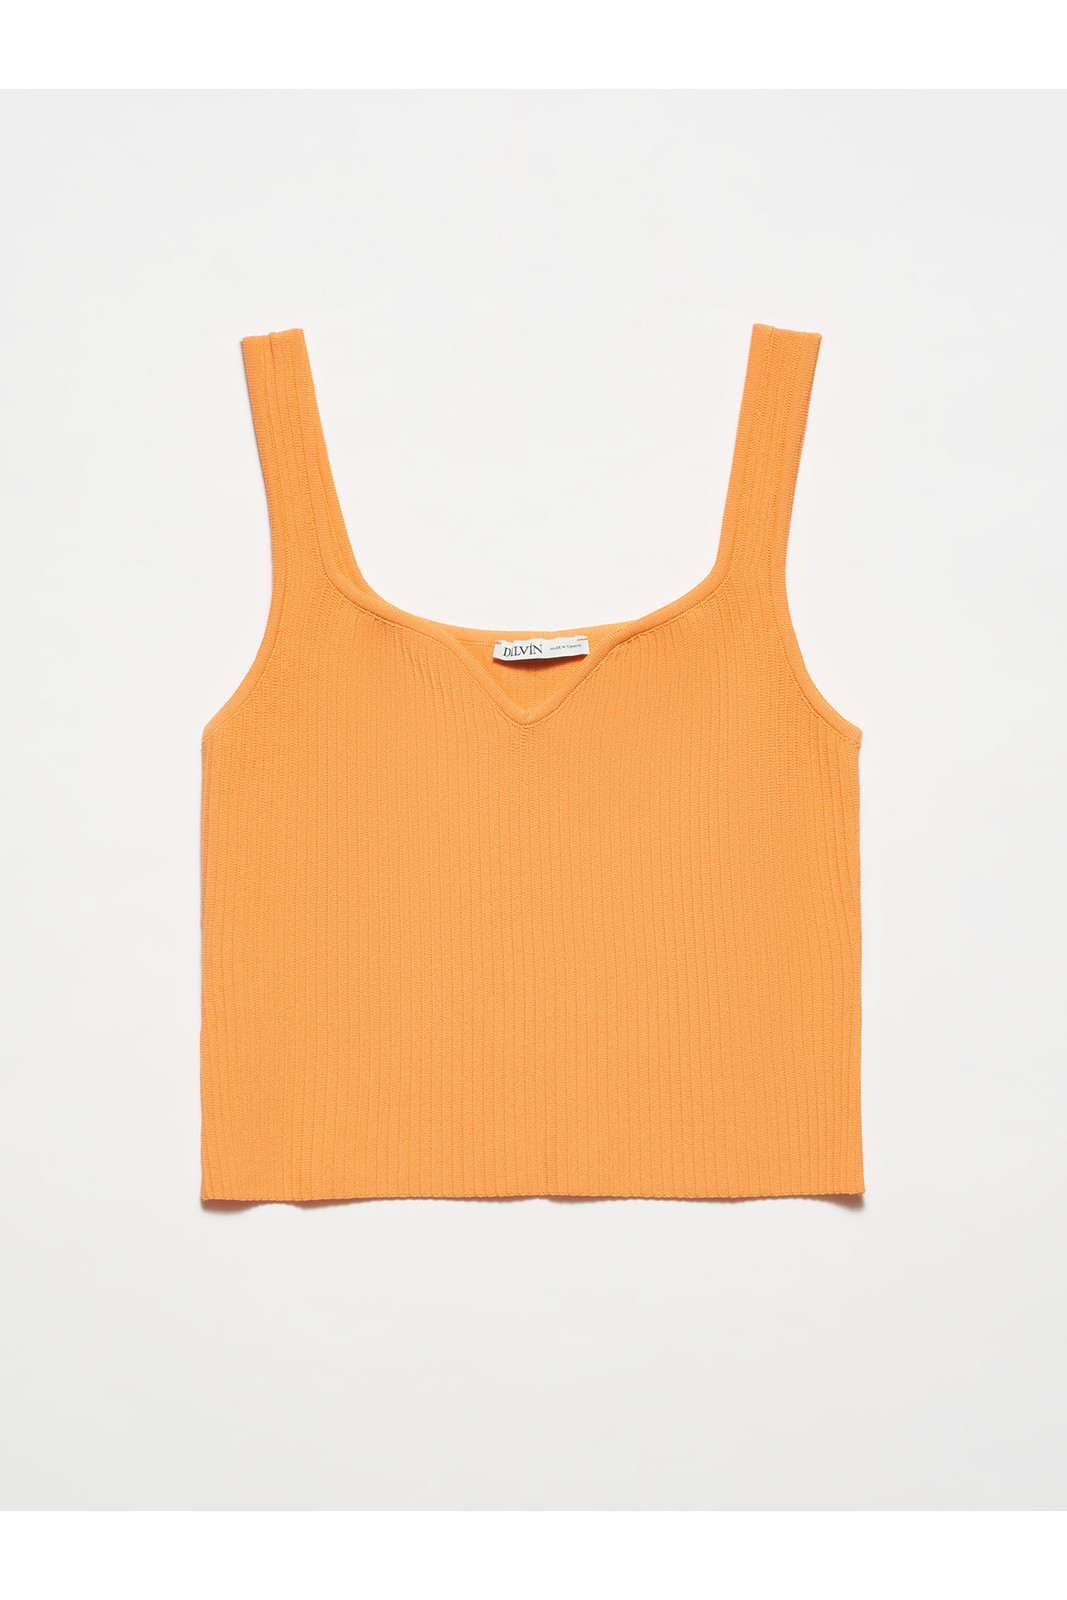 Dilvin 10384 Square Neck Decollete Knitwear Undershirt-Orange